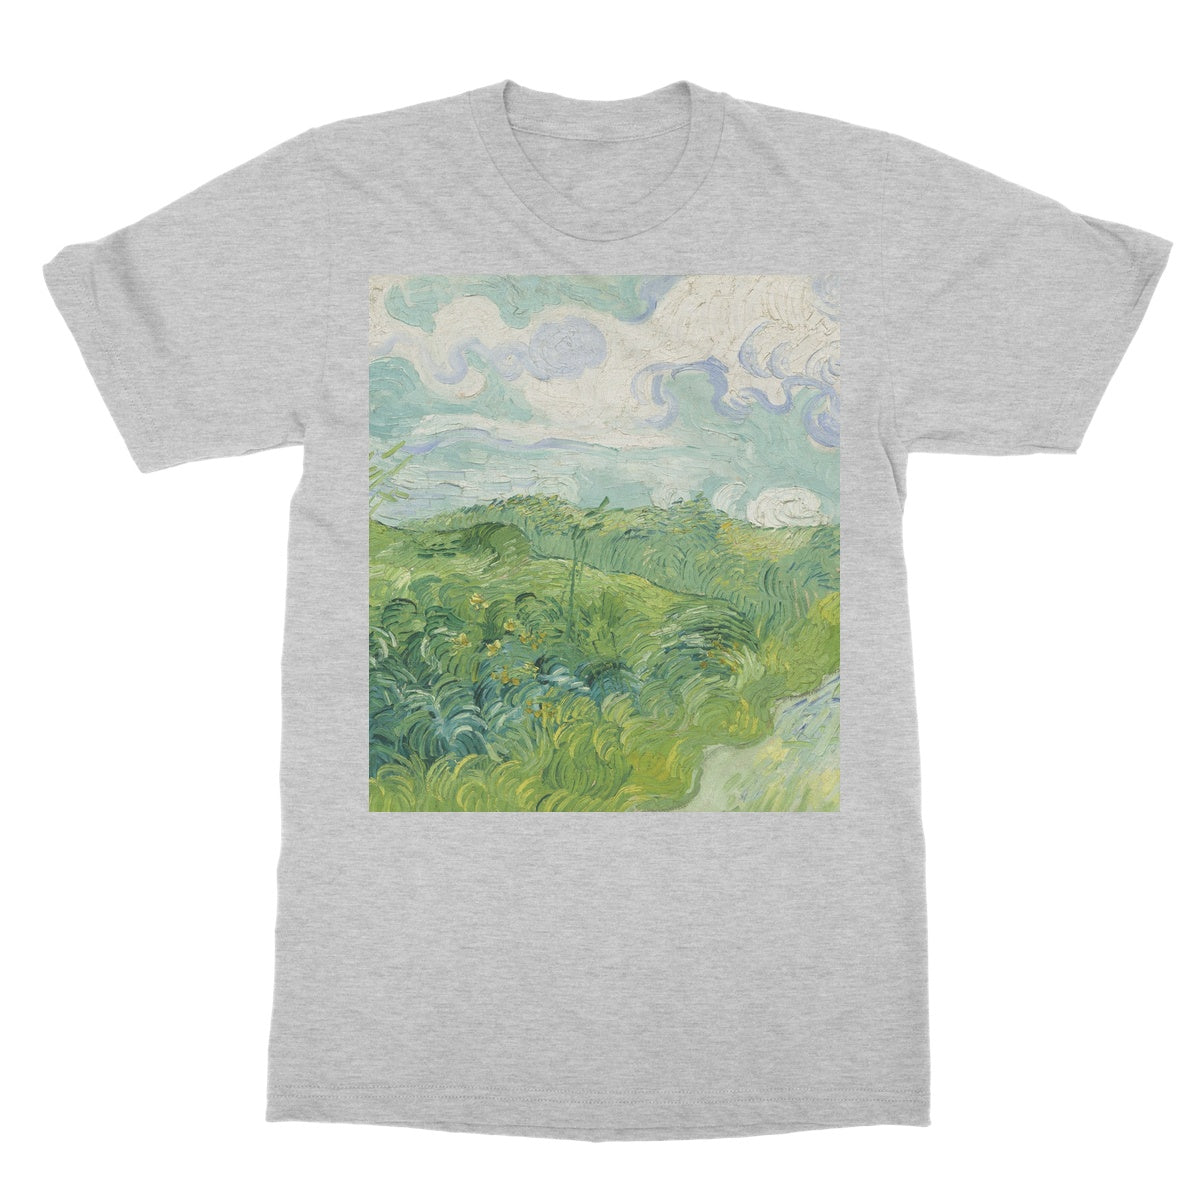 Evergreen Softstyle T-Shirt